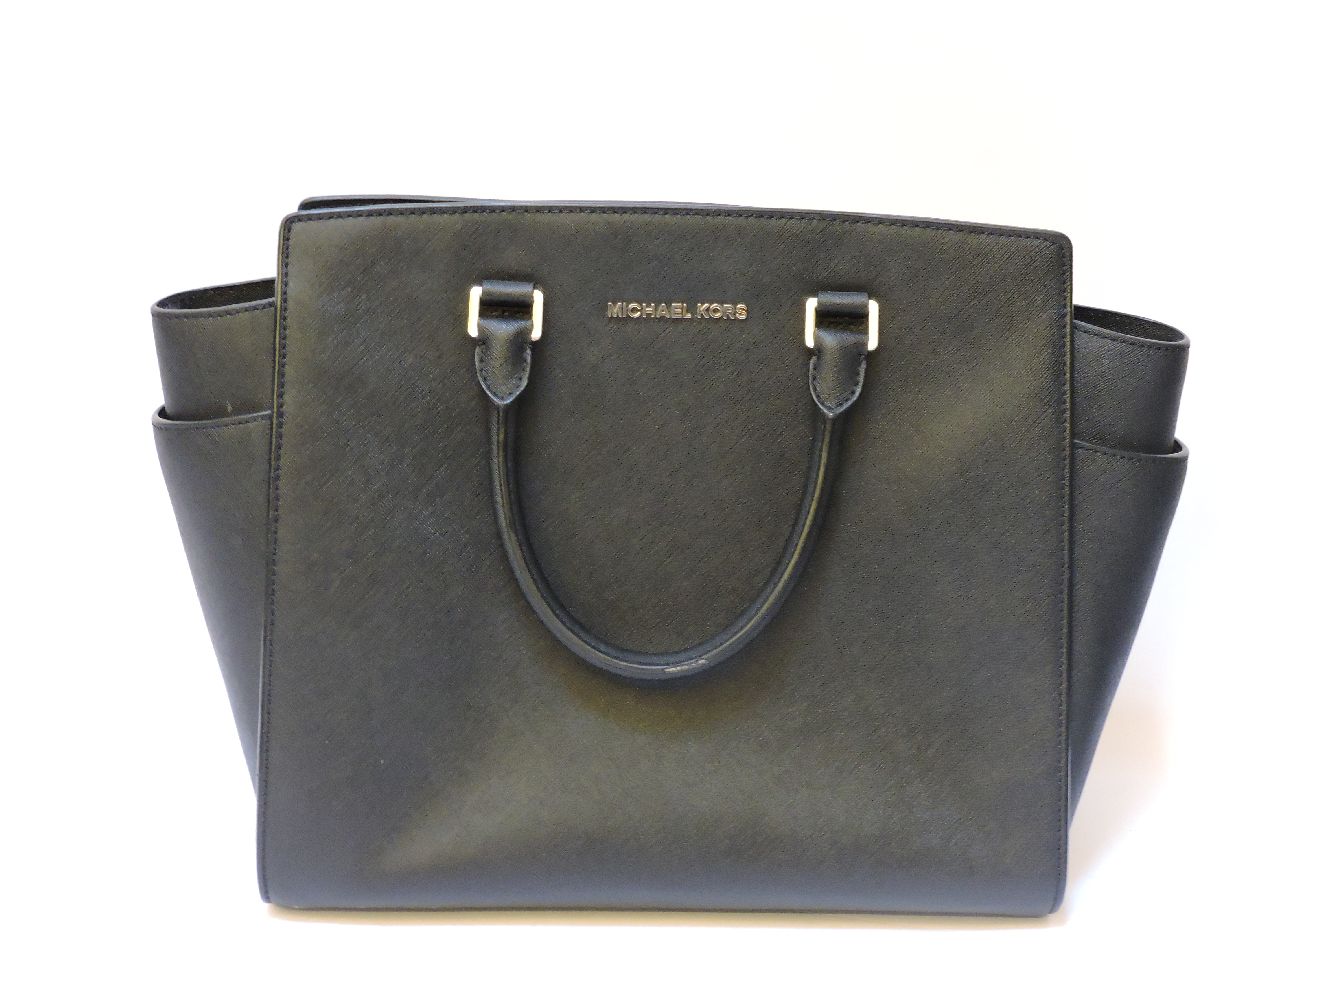 A Michael Kors Selma large black tote handbag, in Saffiano leather, gold tone hardware, date code